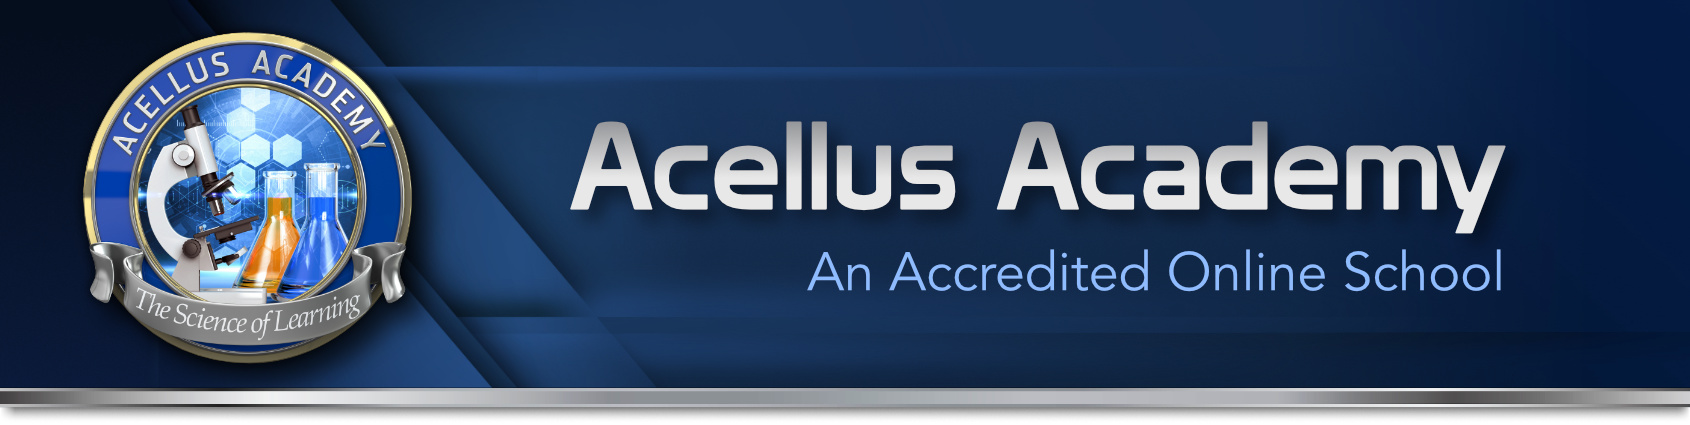 Acellus-Academy-Banner5.jpg